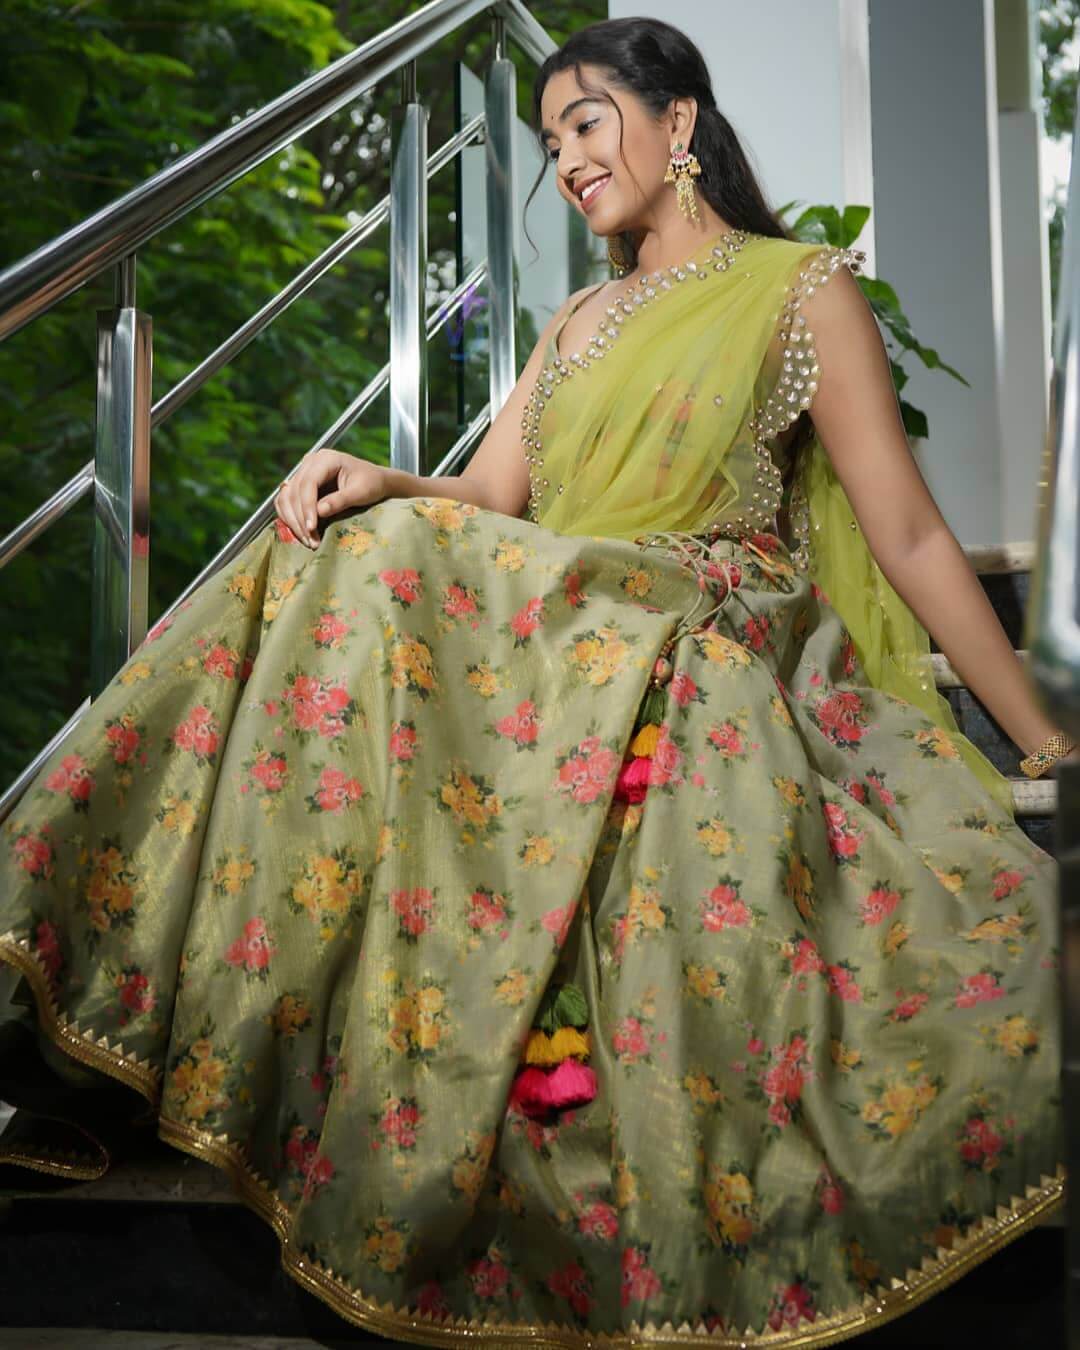 Shivathmika Rajashekar Look Gorgeous In Floral Print Lehenga With Net Dupatta